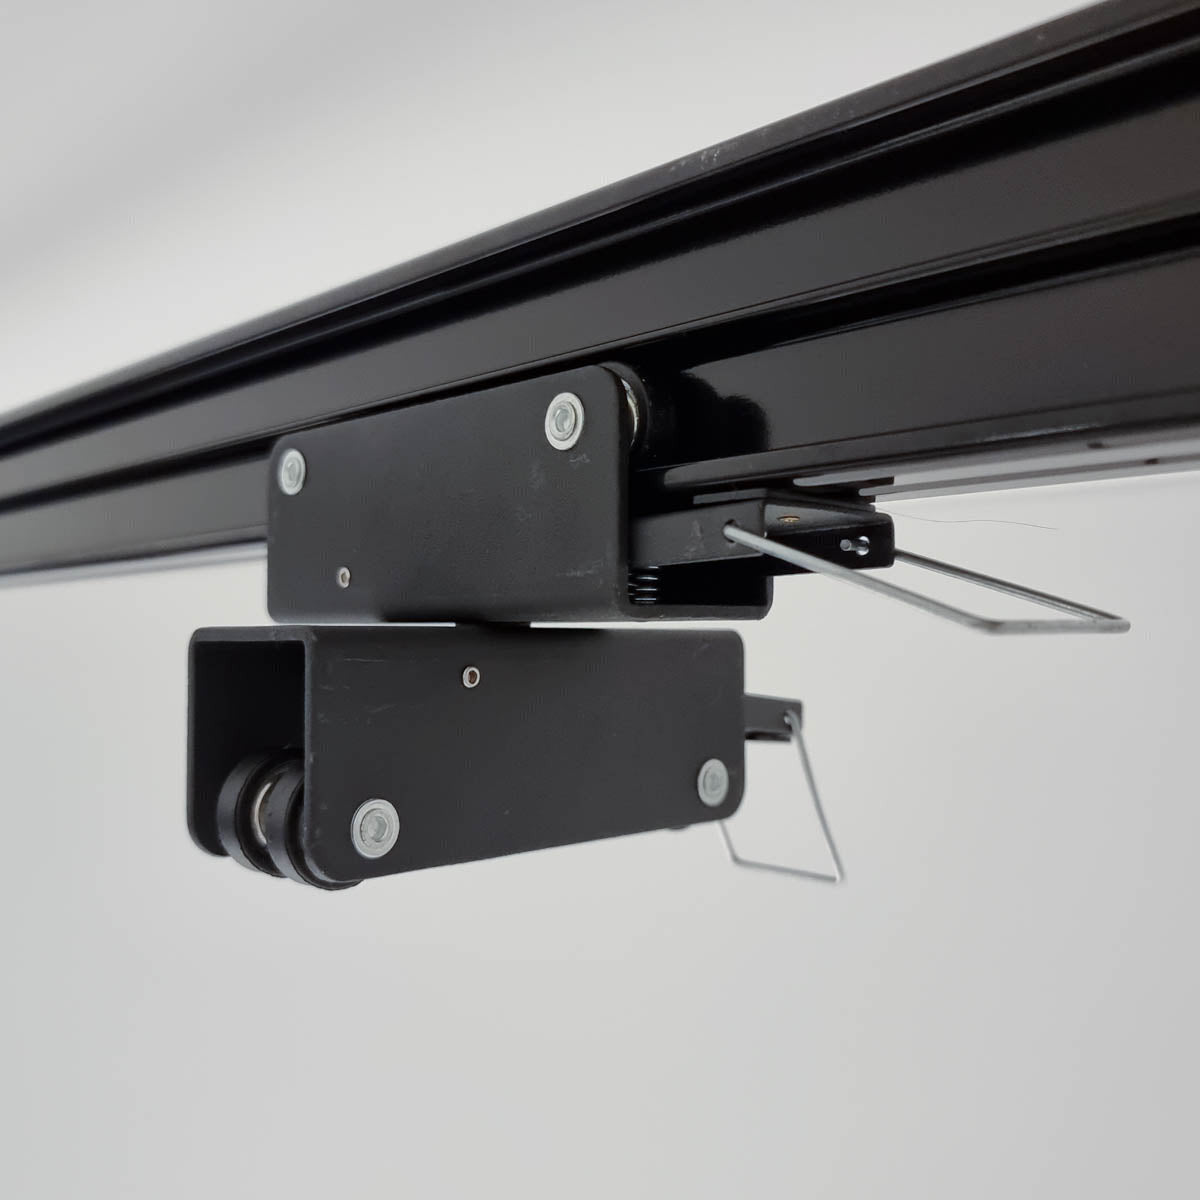 LightPro 4 Pantograph Kit - Dual Ceiling Track w 4 Pantographs - Dragon Image